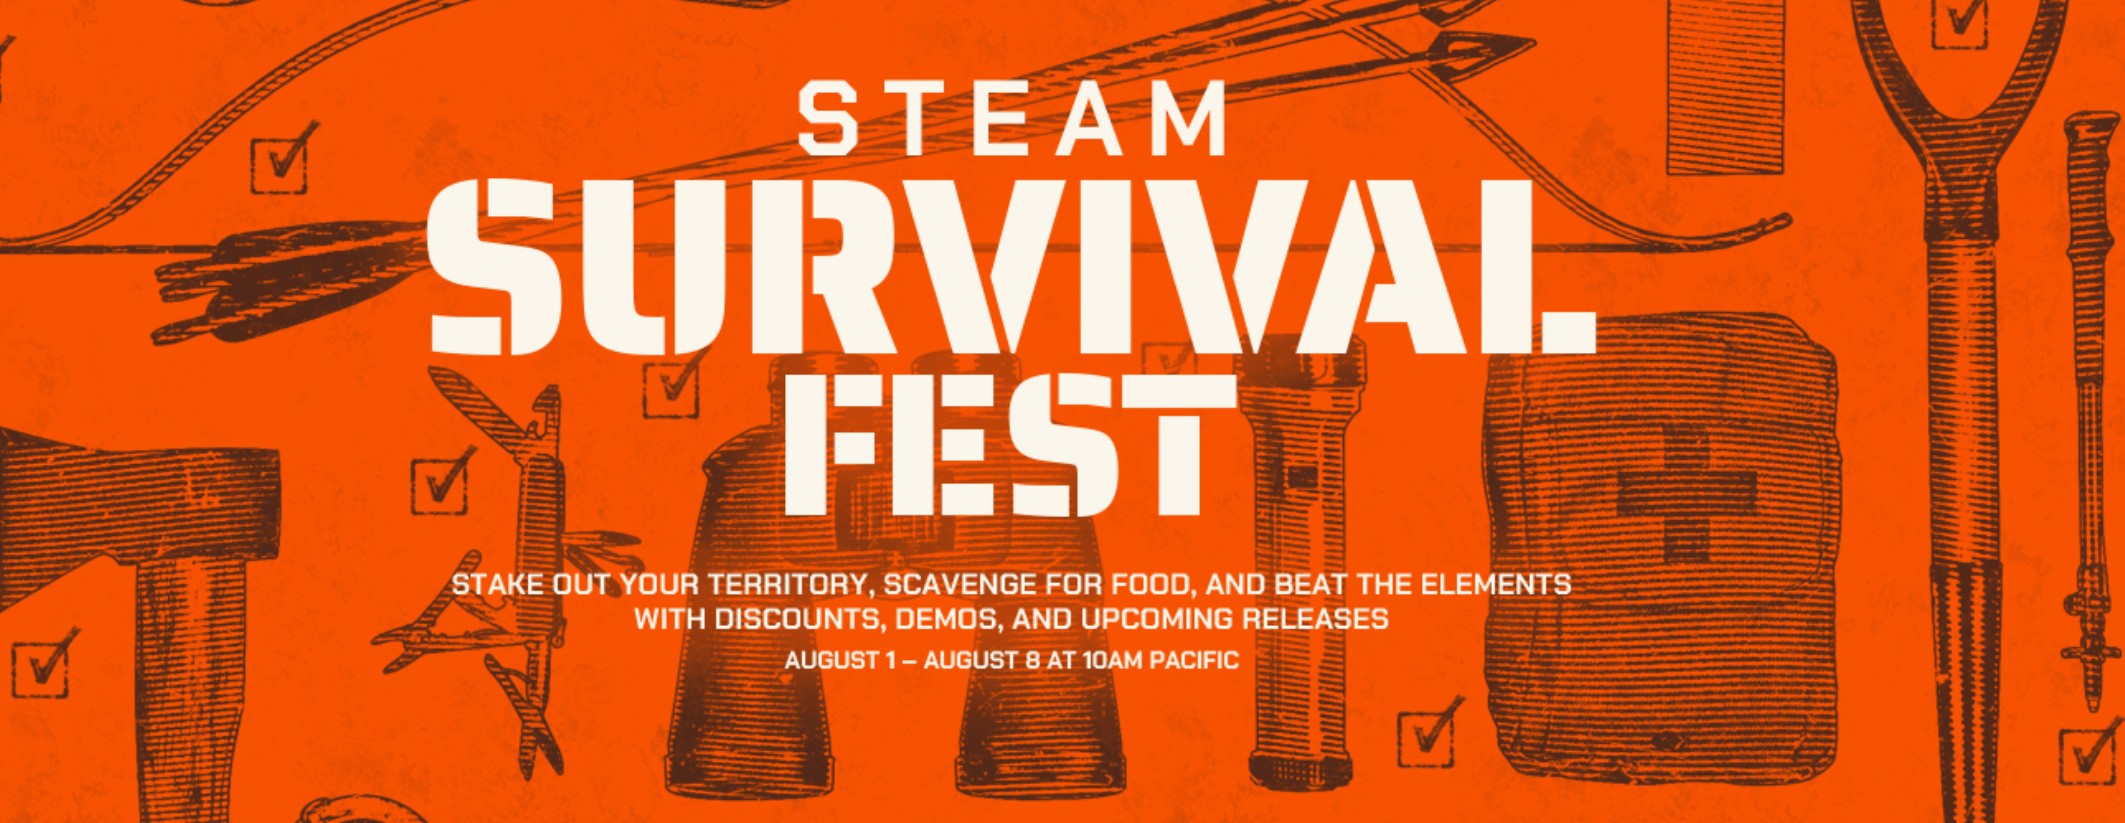 steam survival fest promo